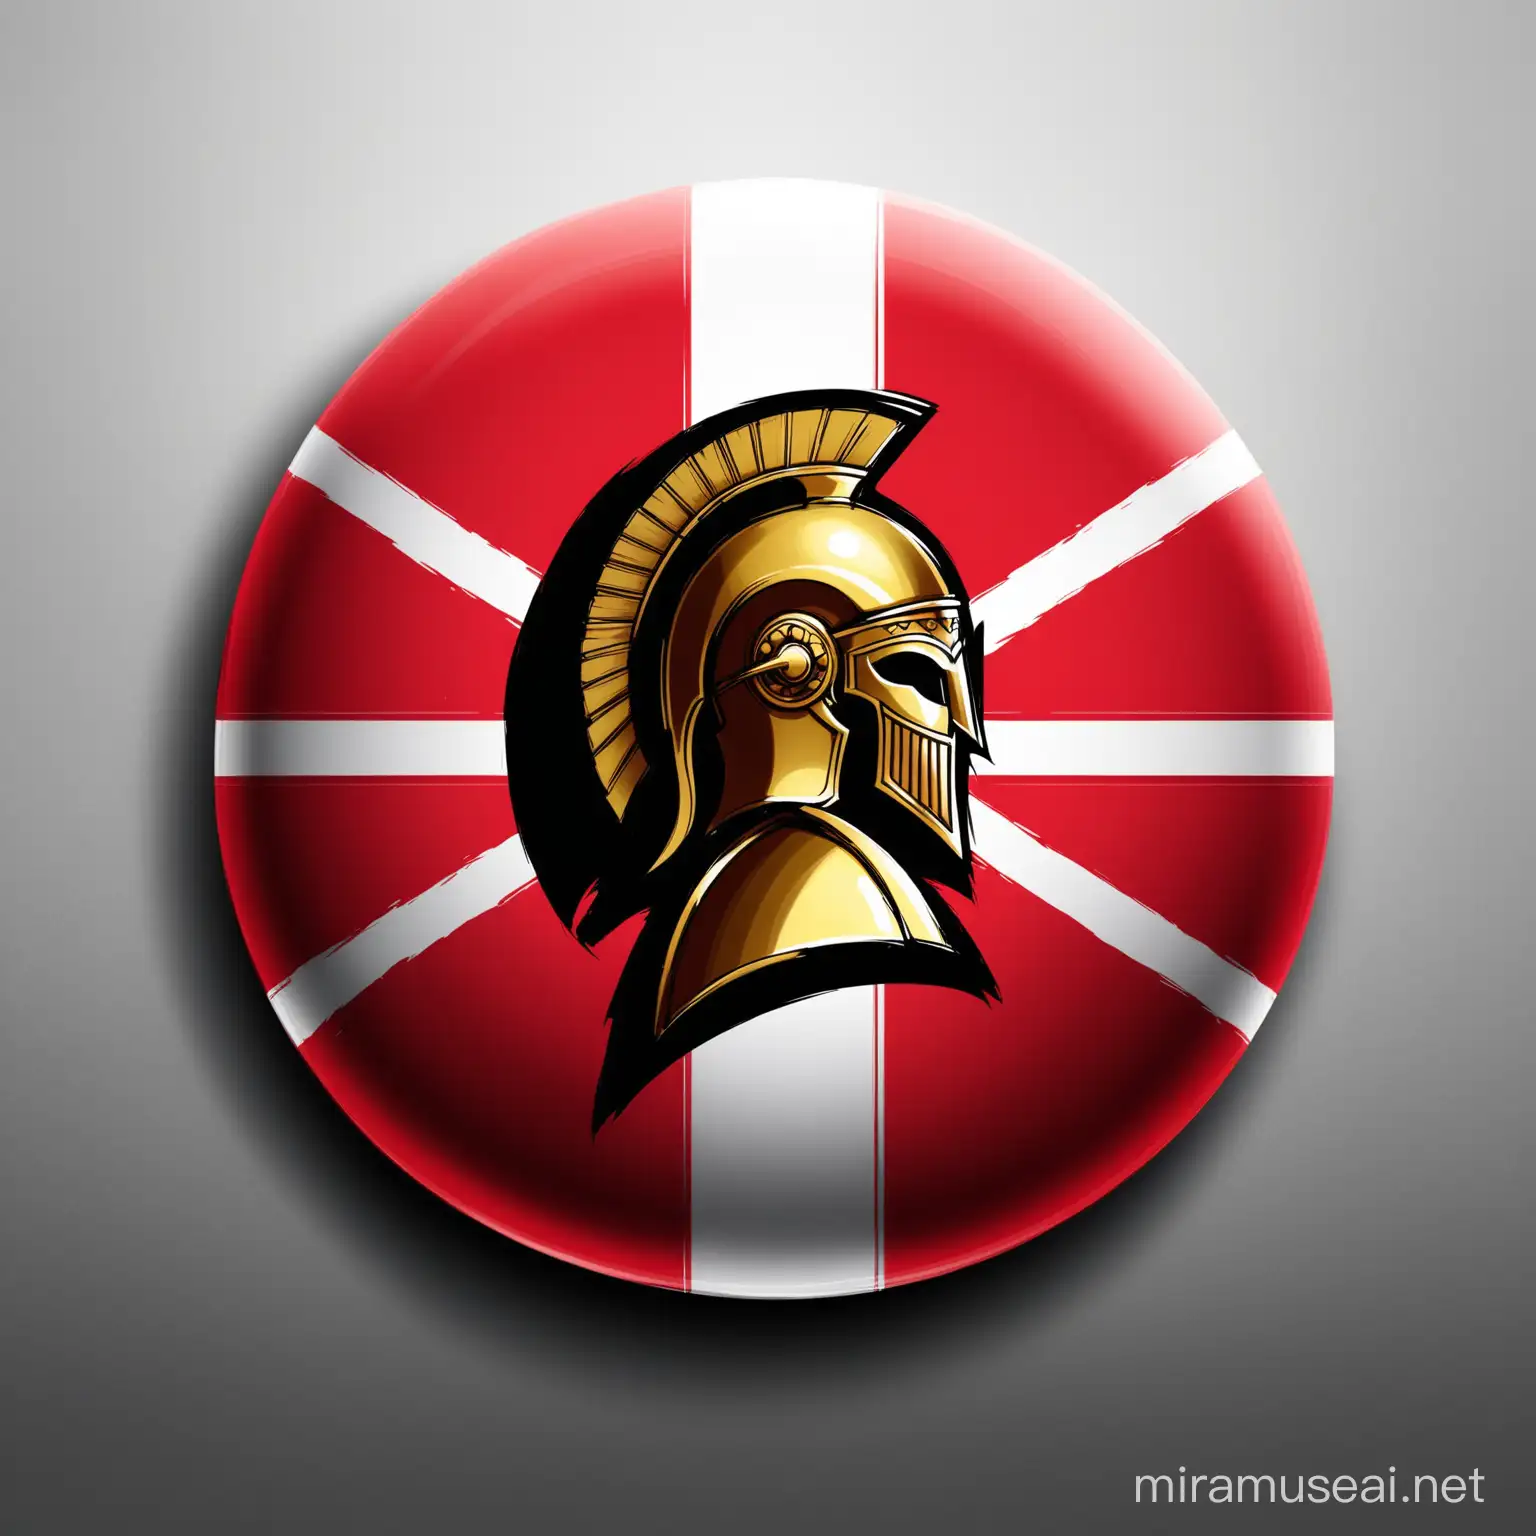 sparta,danish flag,logo
 
